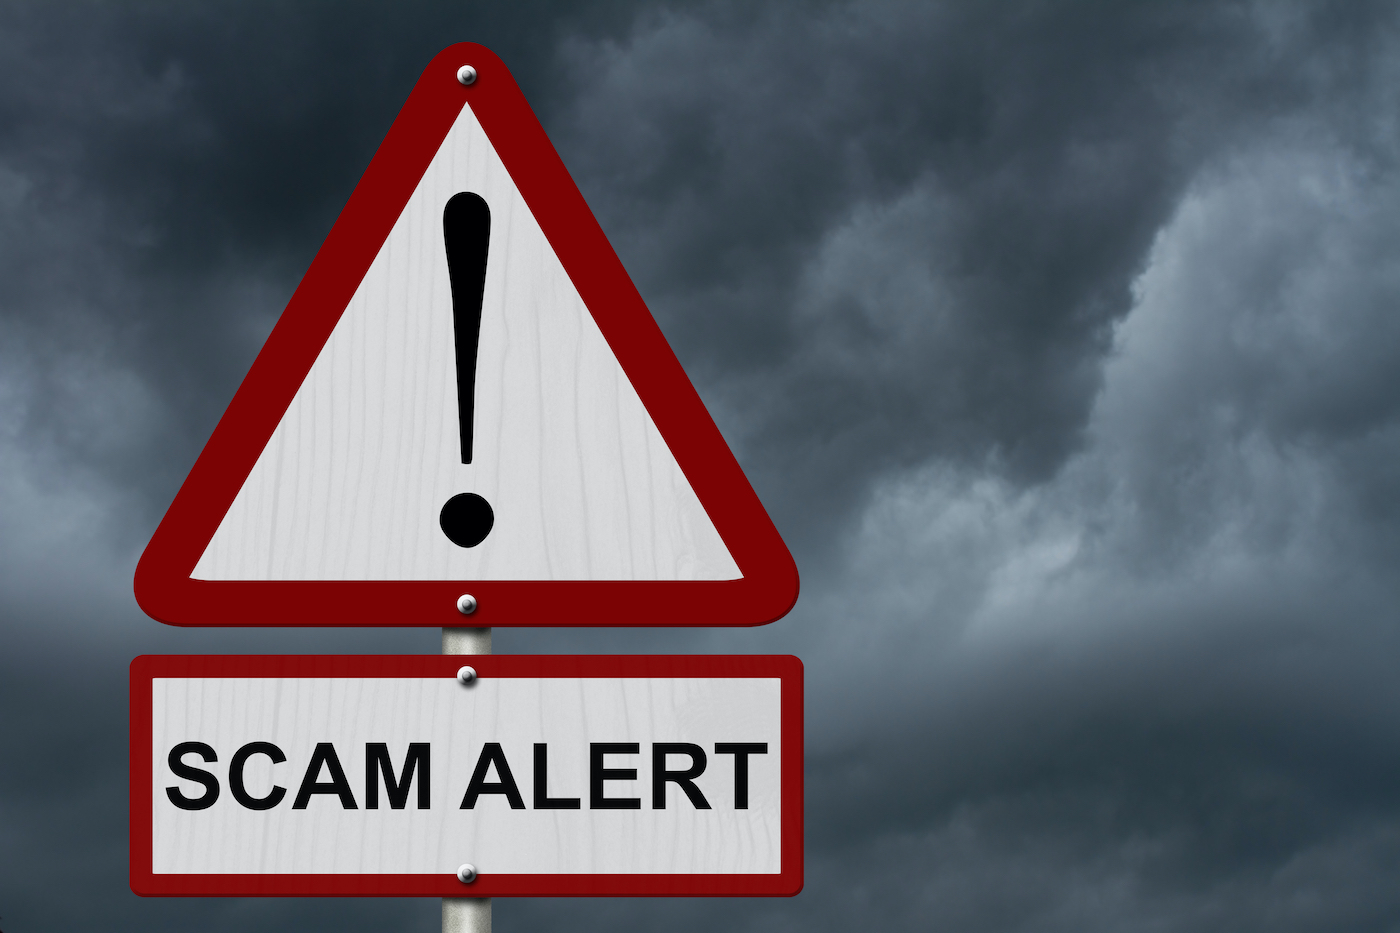 Scam alert sign against a thunderstorm background